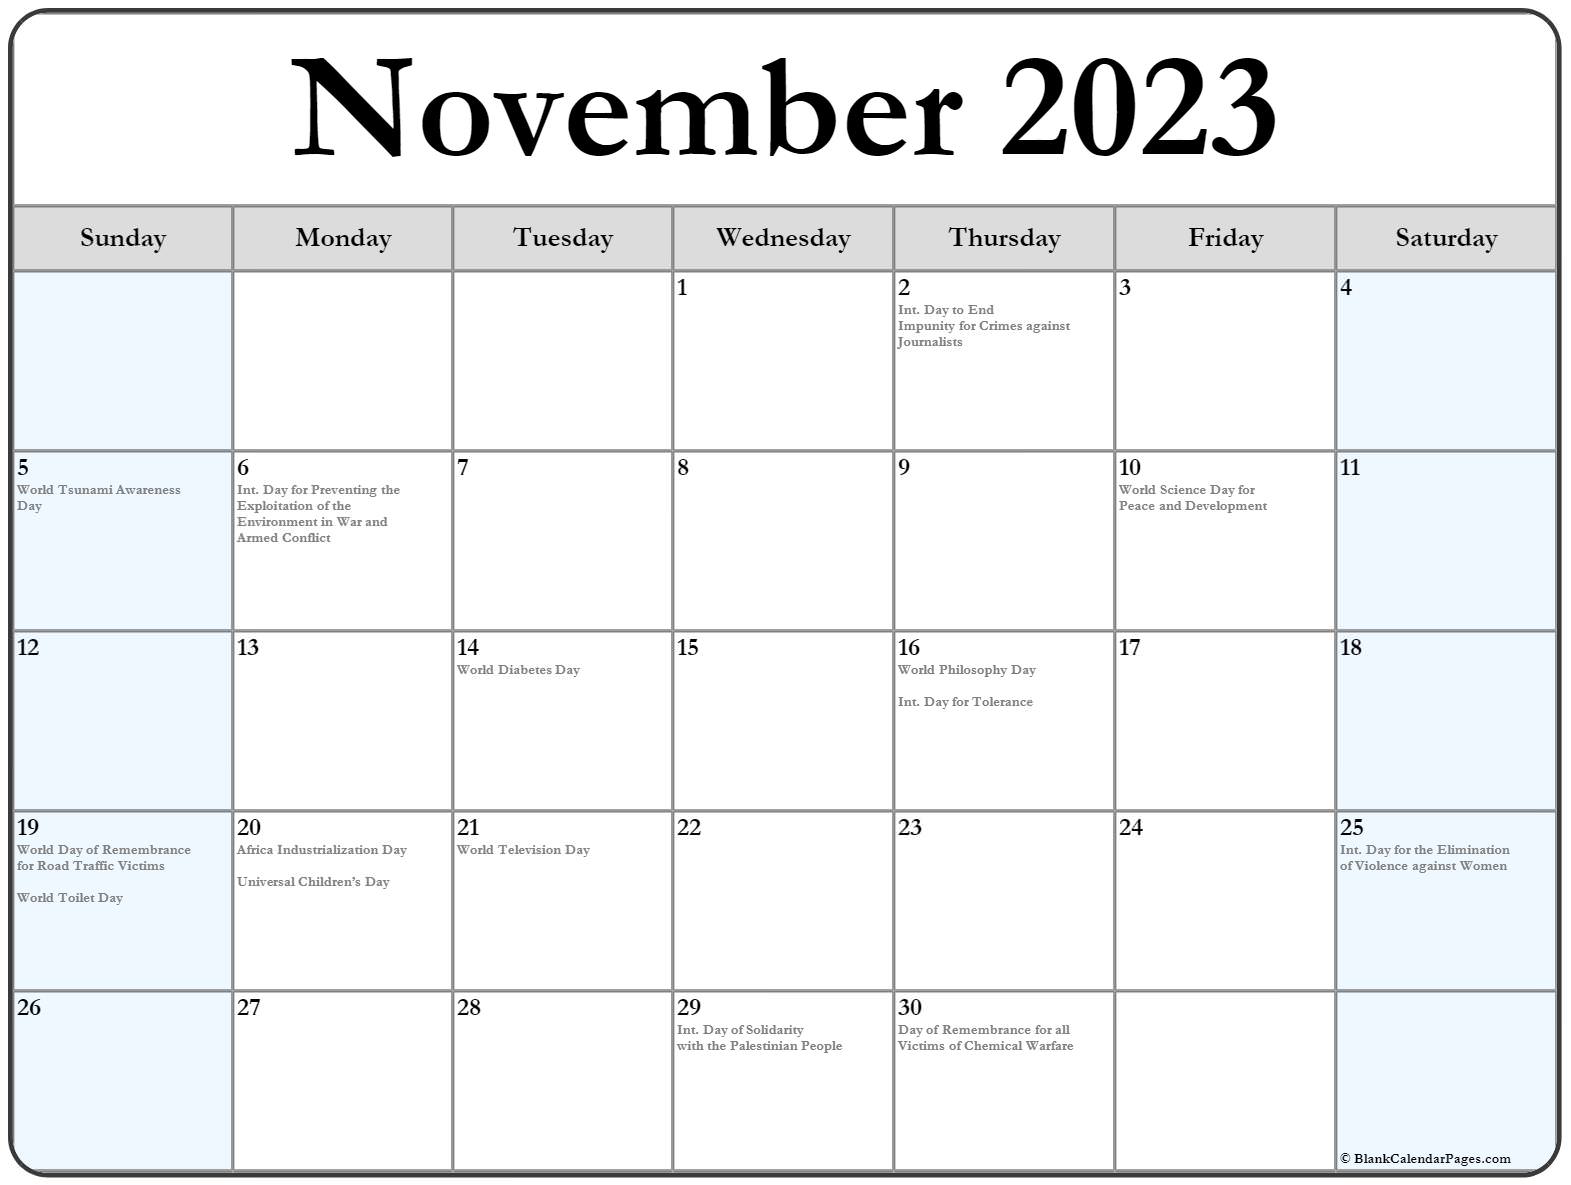 november-2023-calendar-recette-2023